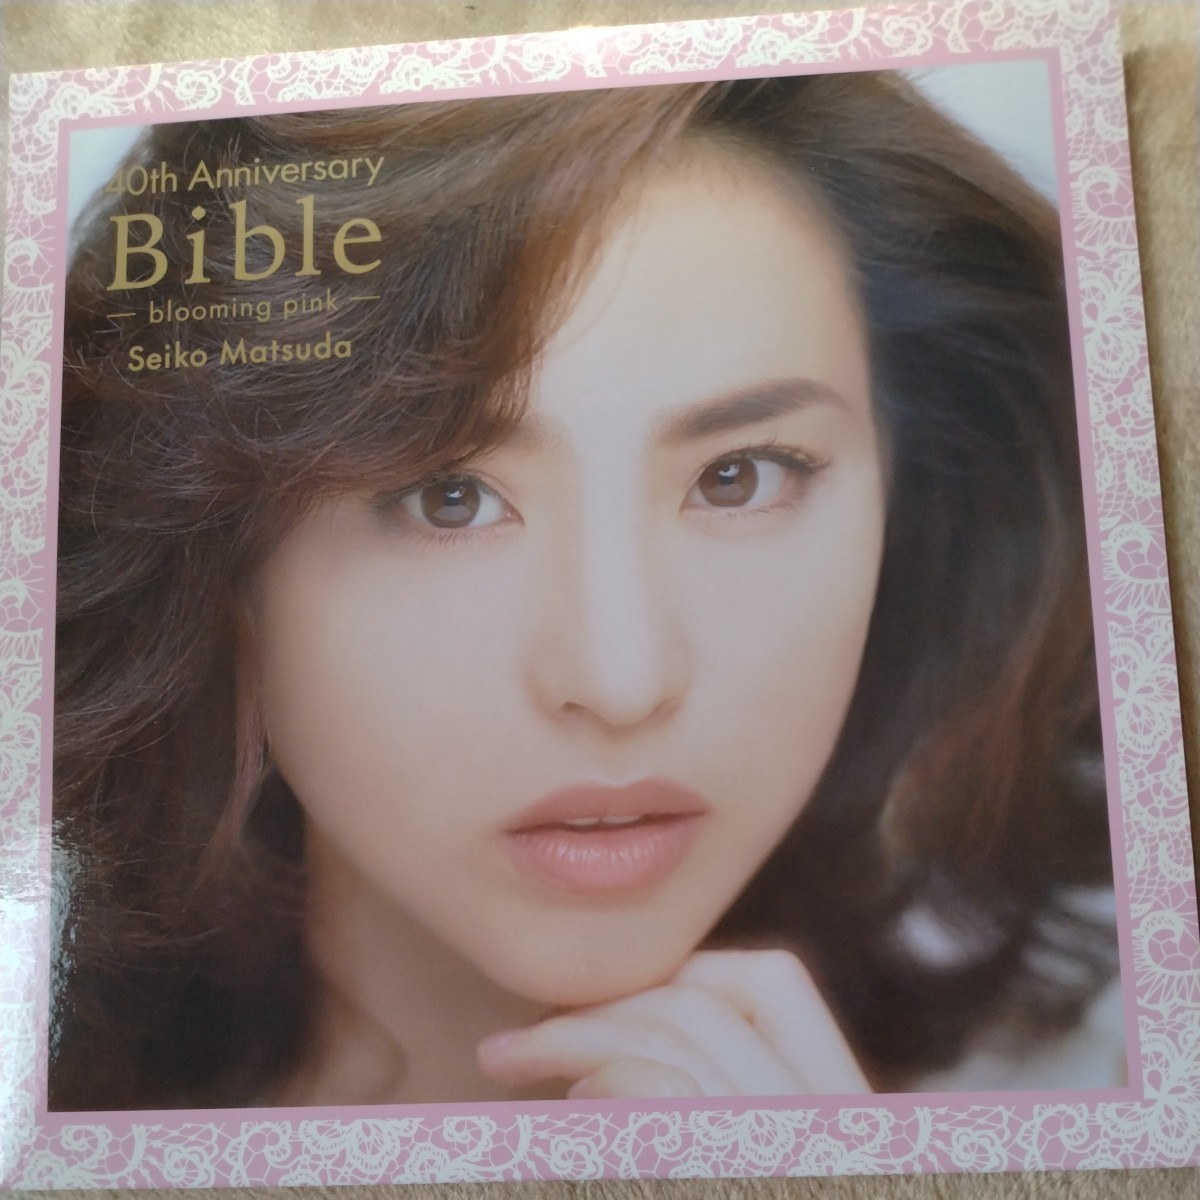 松田聖子 40th Anniversary Bible 完全生産限定盤 blooming pink